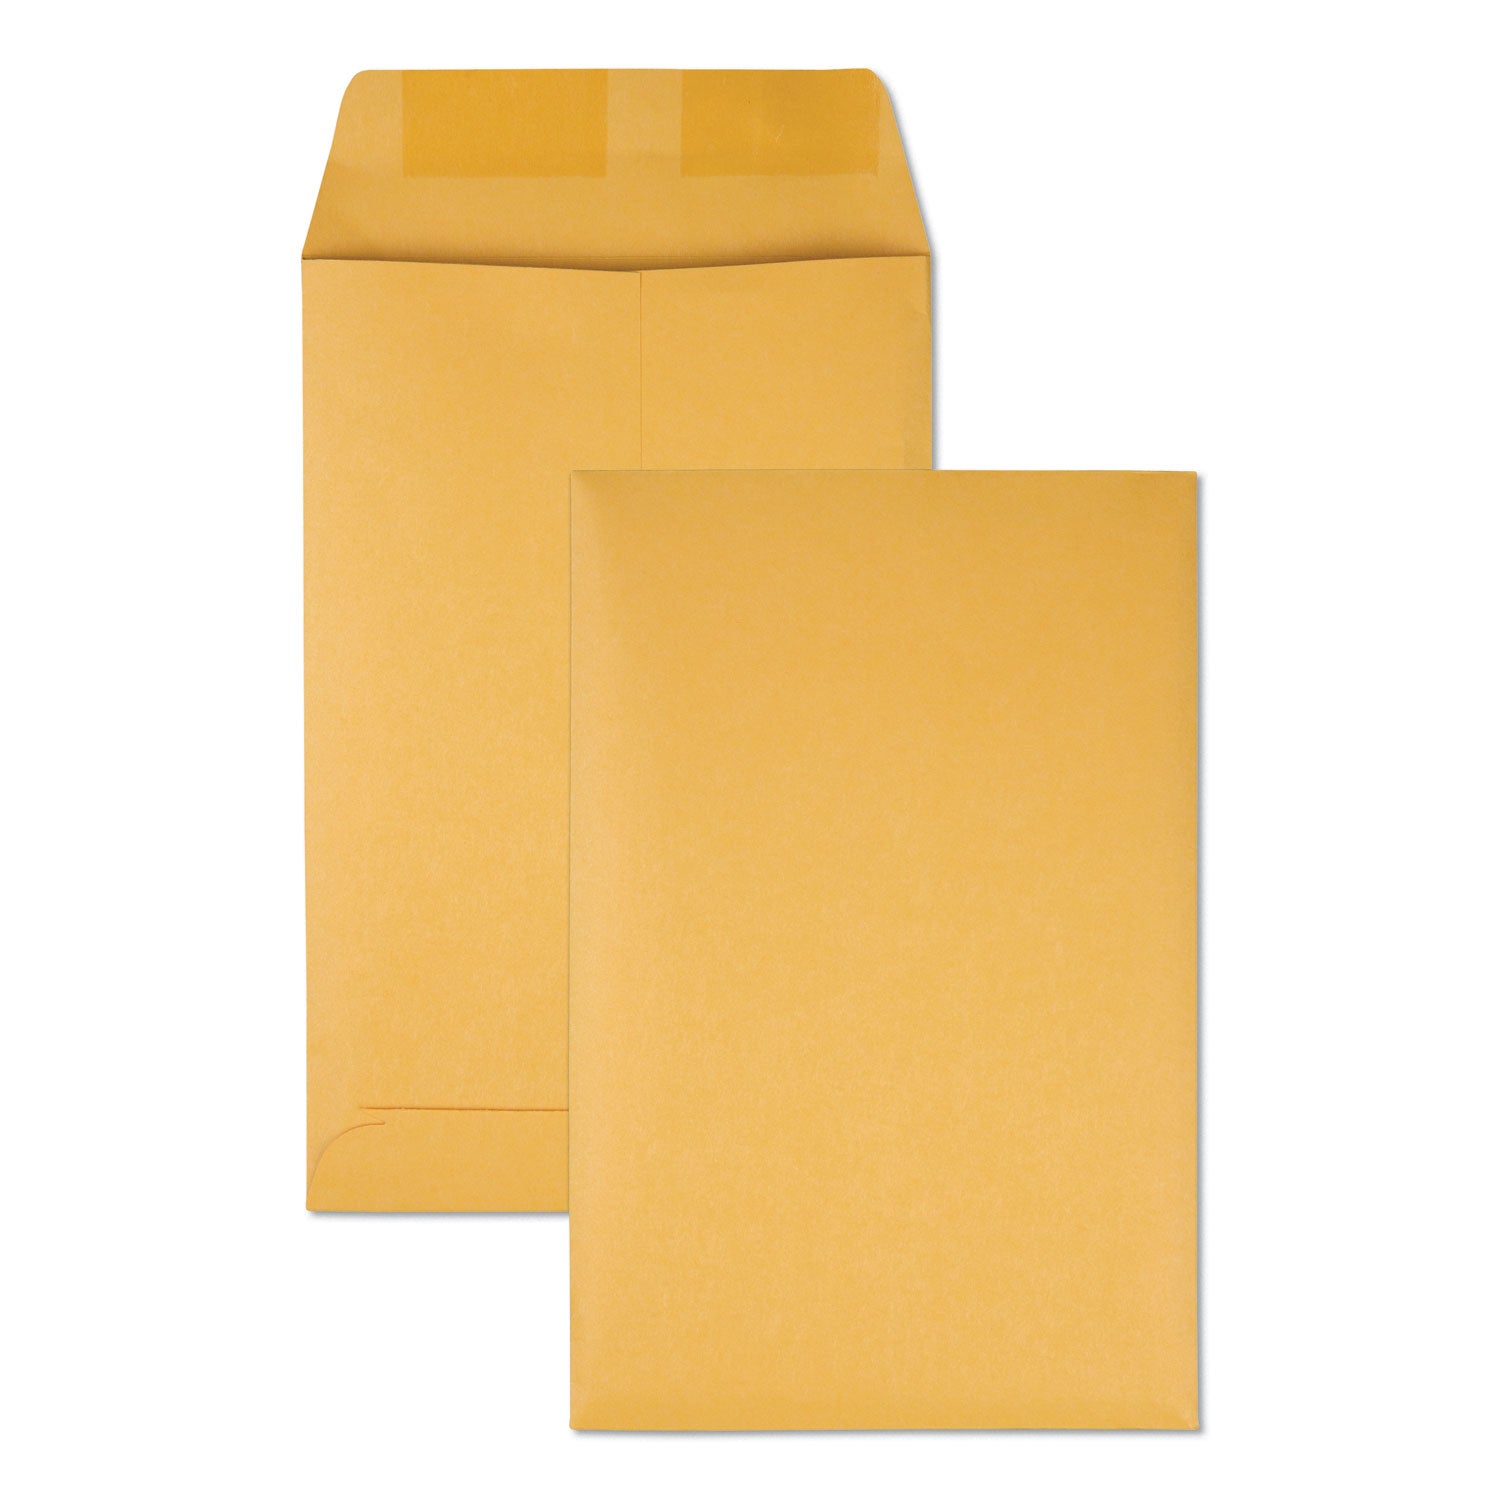 Catalog Envelope, 28 lb Bond Weight Kraft, #1 3/4, Square Flap, Gummed Closure, 6.5 x 9.5, Brown Kraft, 500/Box - 